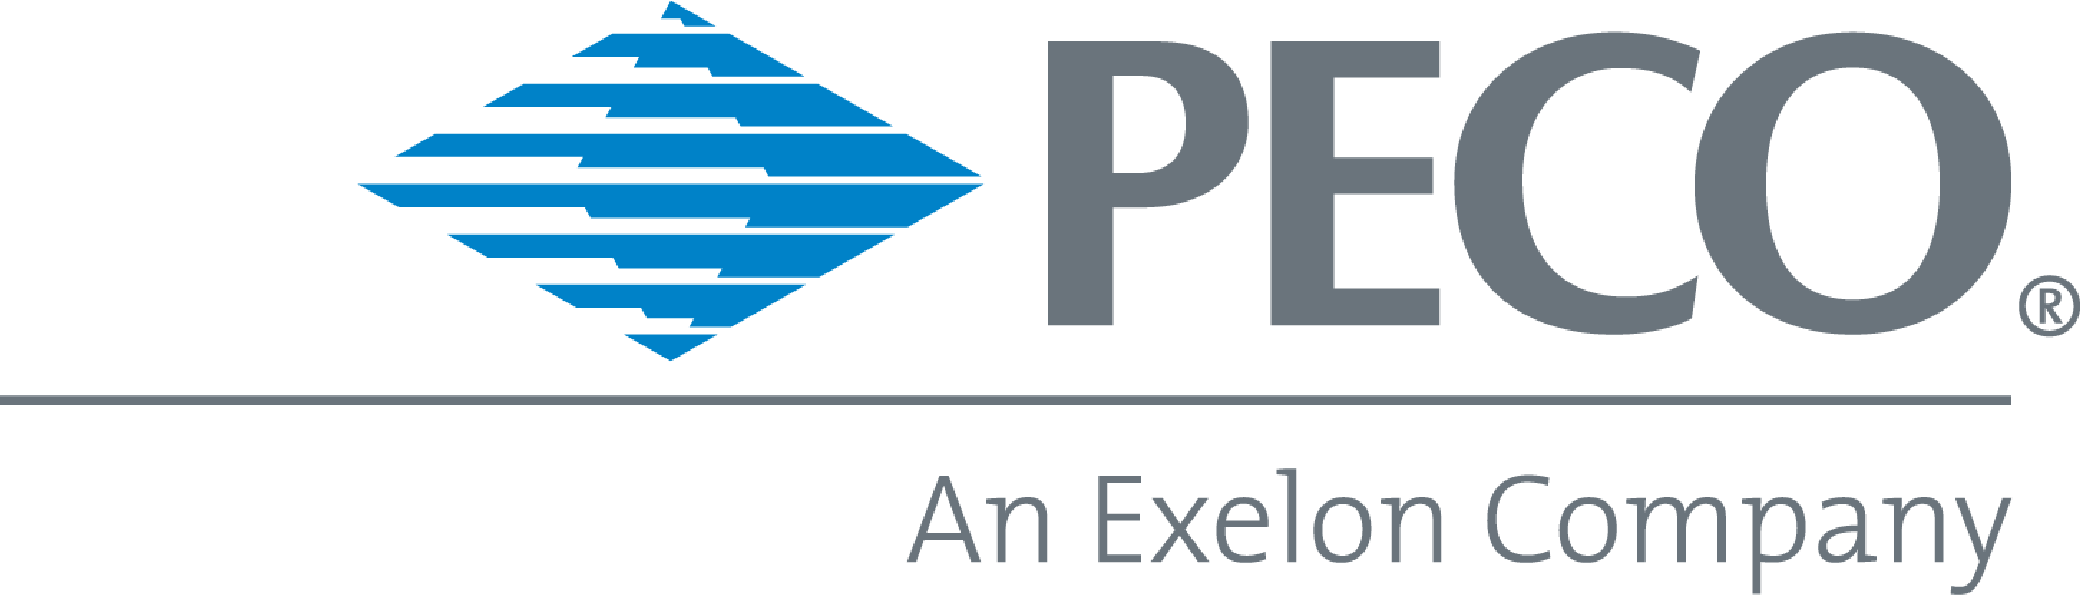 PECO. An Exelon Company.